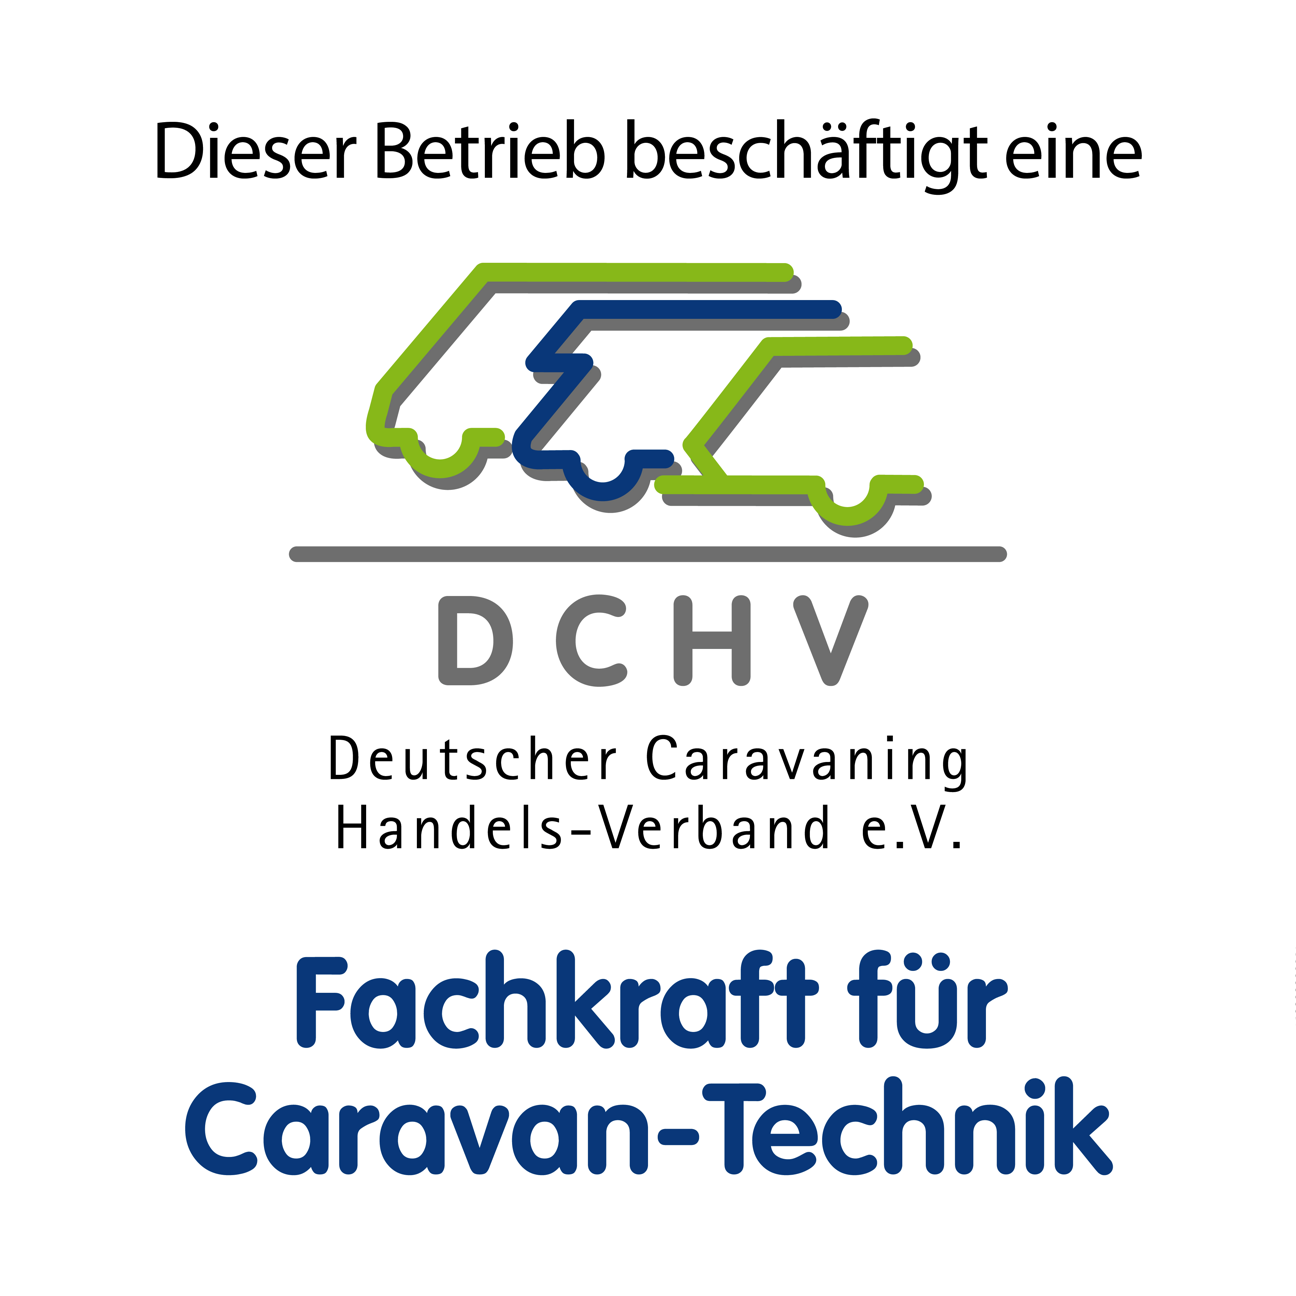 Deutscher Caravaning Handels Verband e.V.